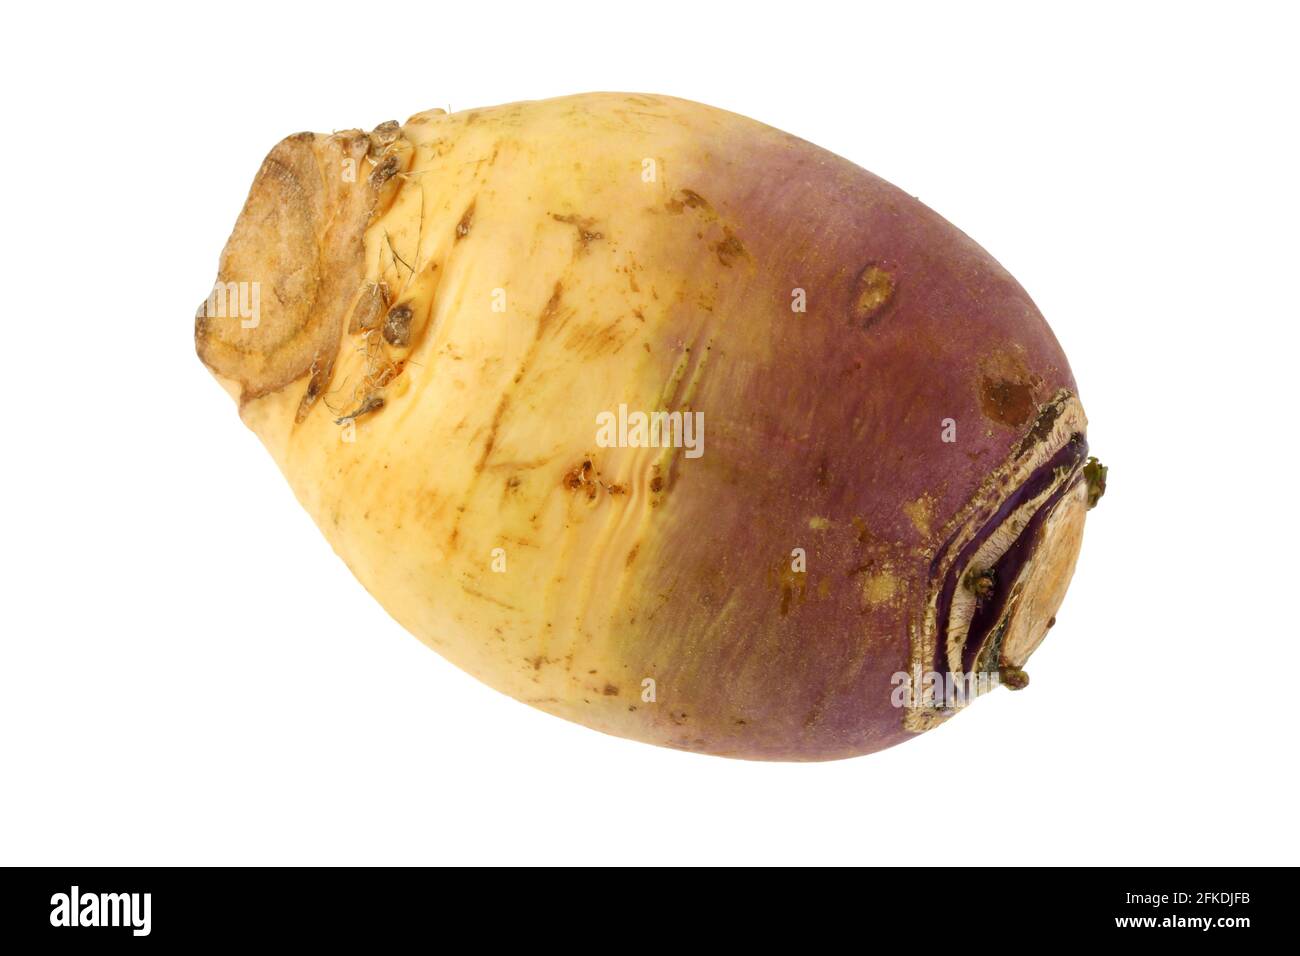 Closeup photo of Turnip (Brassica rapa) on a white background Stock Photo